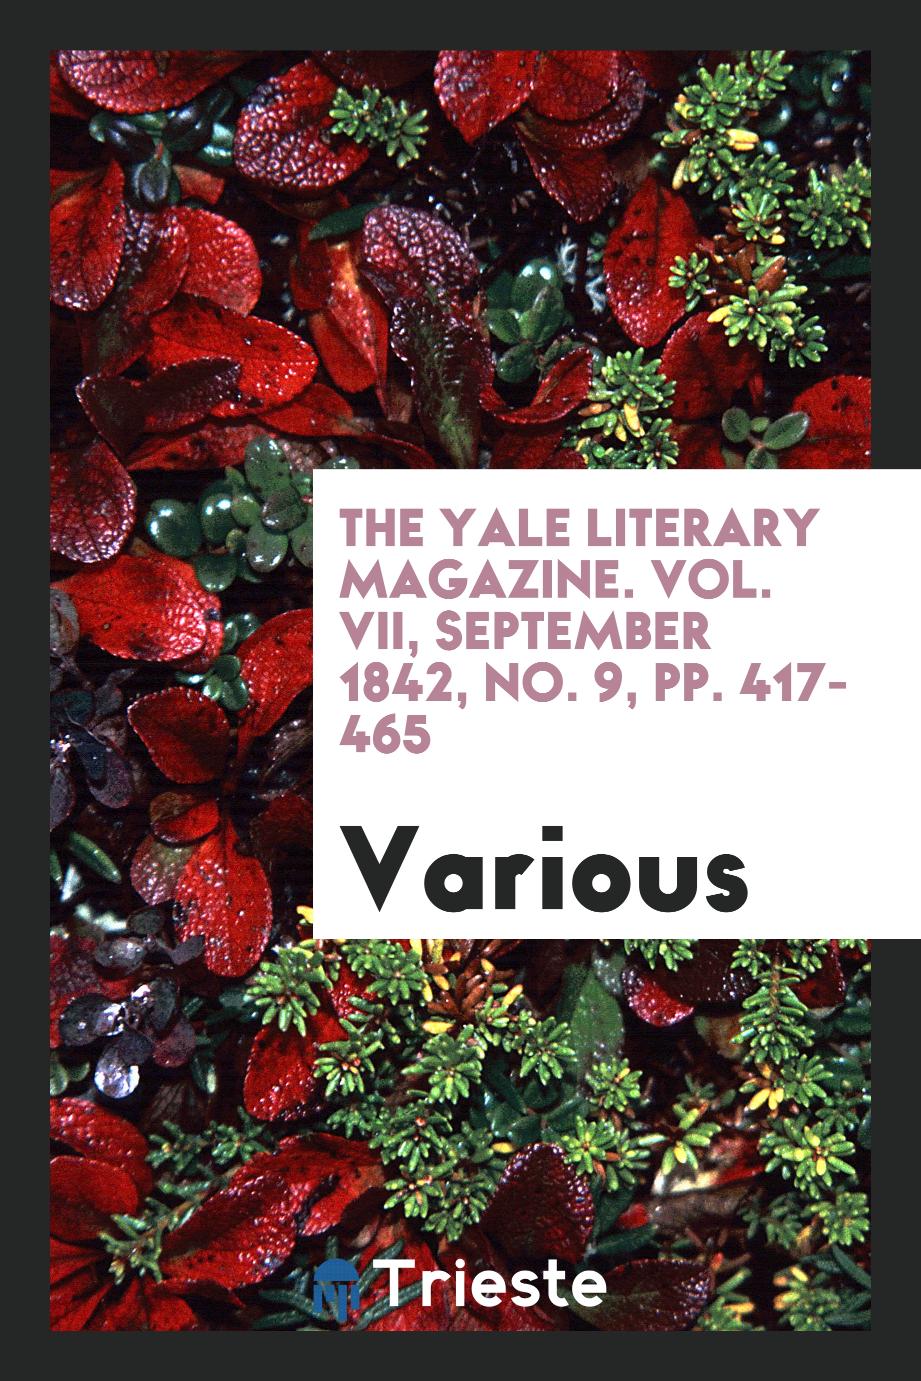 The Yale literary magazine. Vol. VII, September 1842, No. 9, pp. 417-465